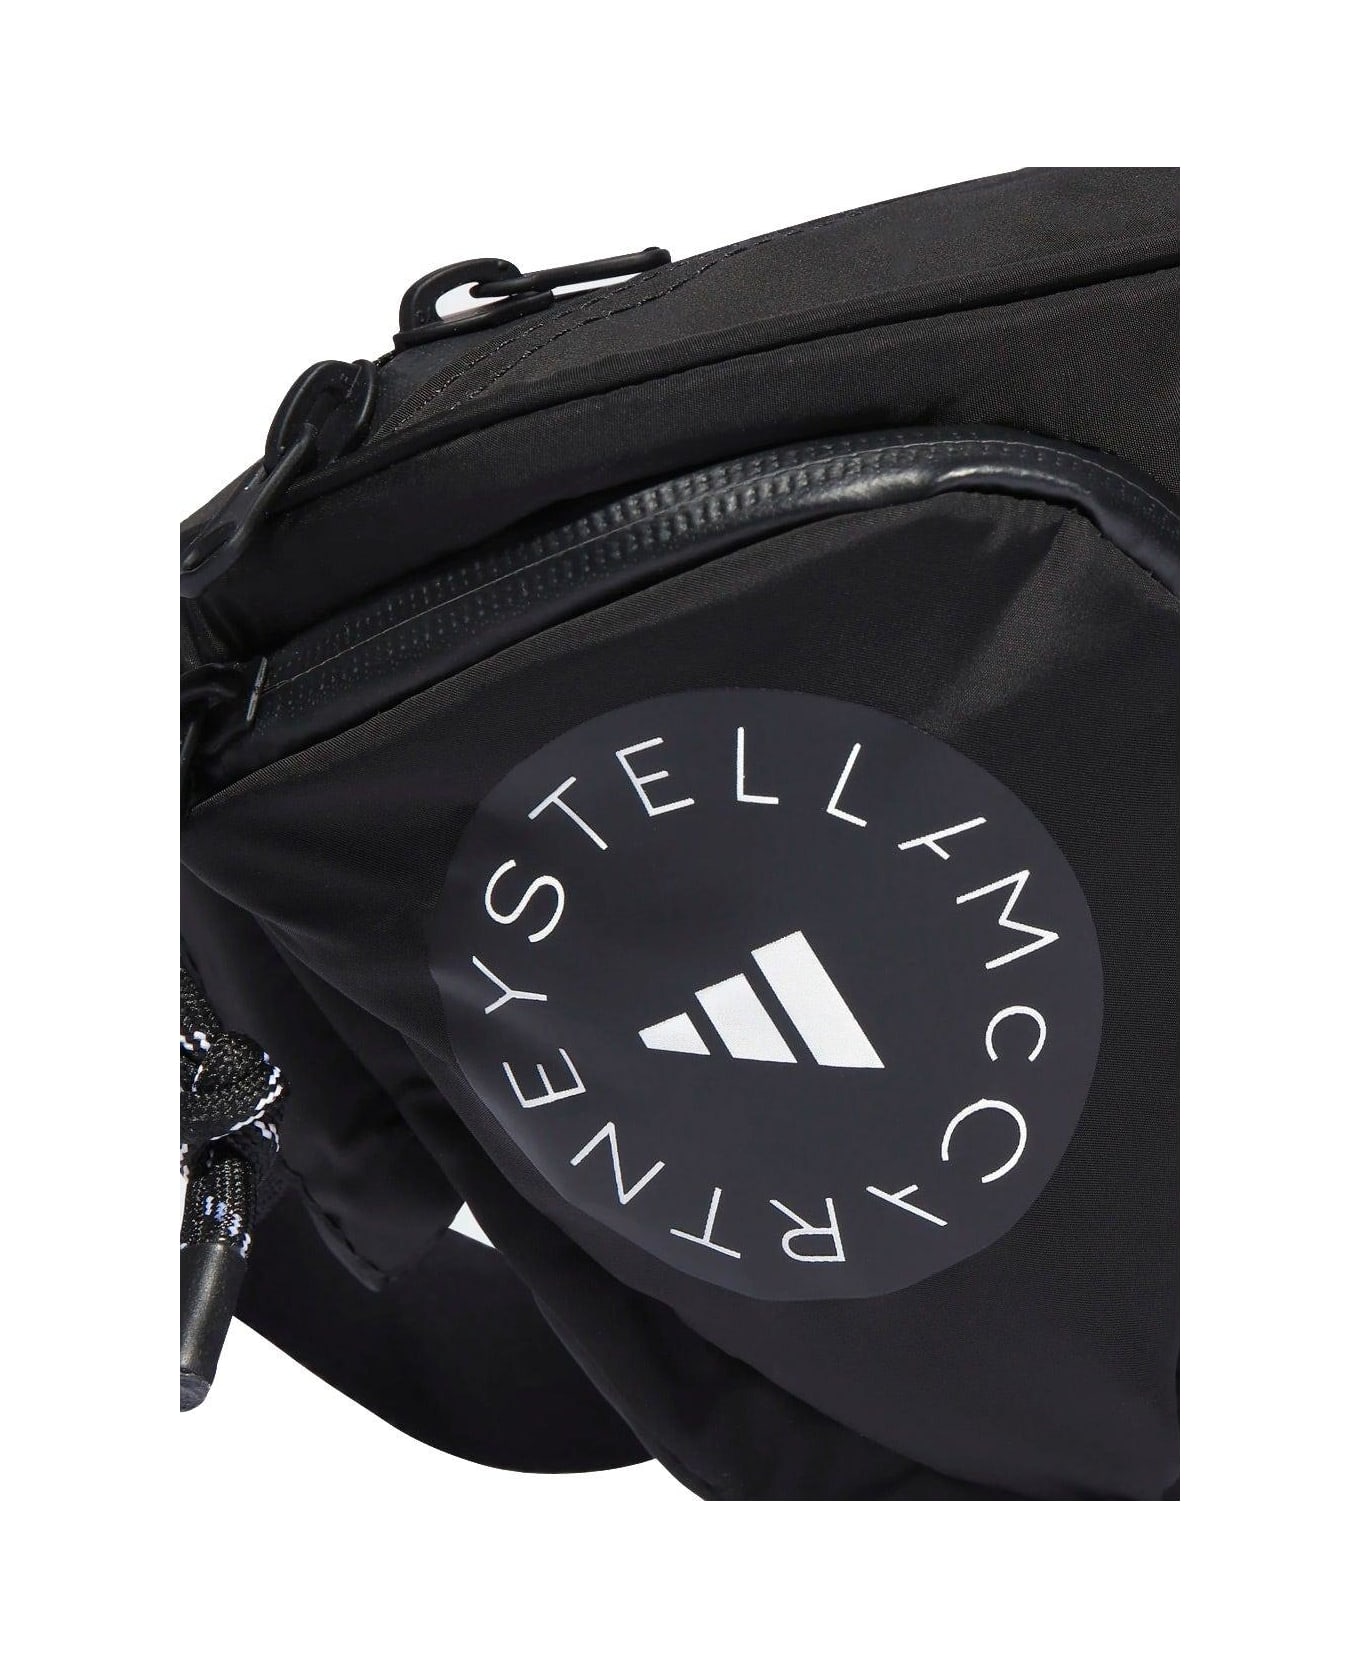 Adidas by Stella McCartney Logo Belt Bag - Black/white/black